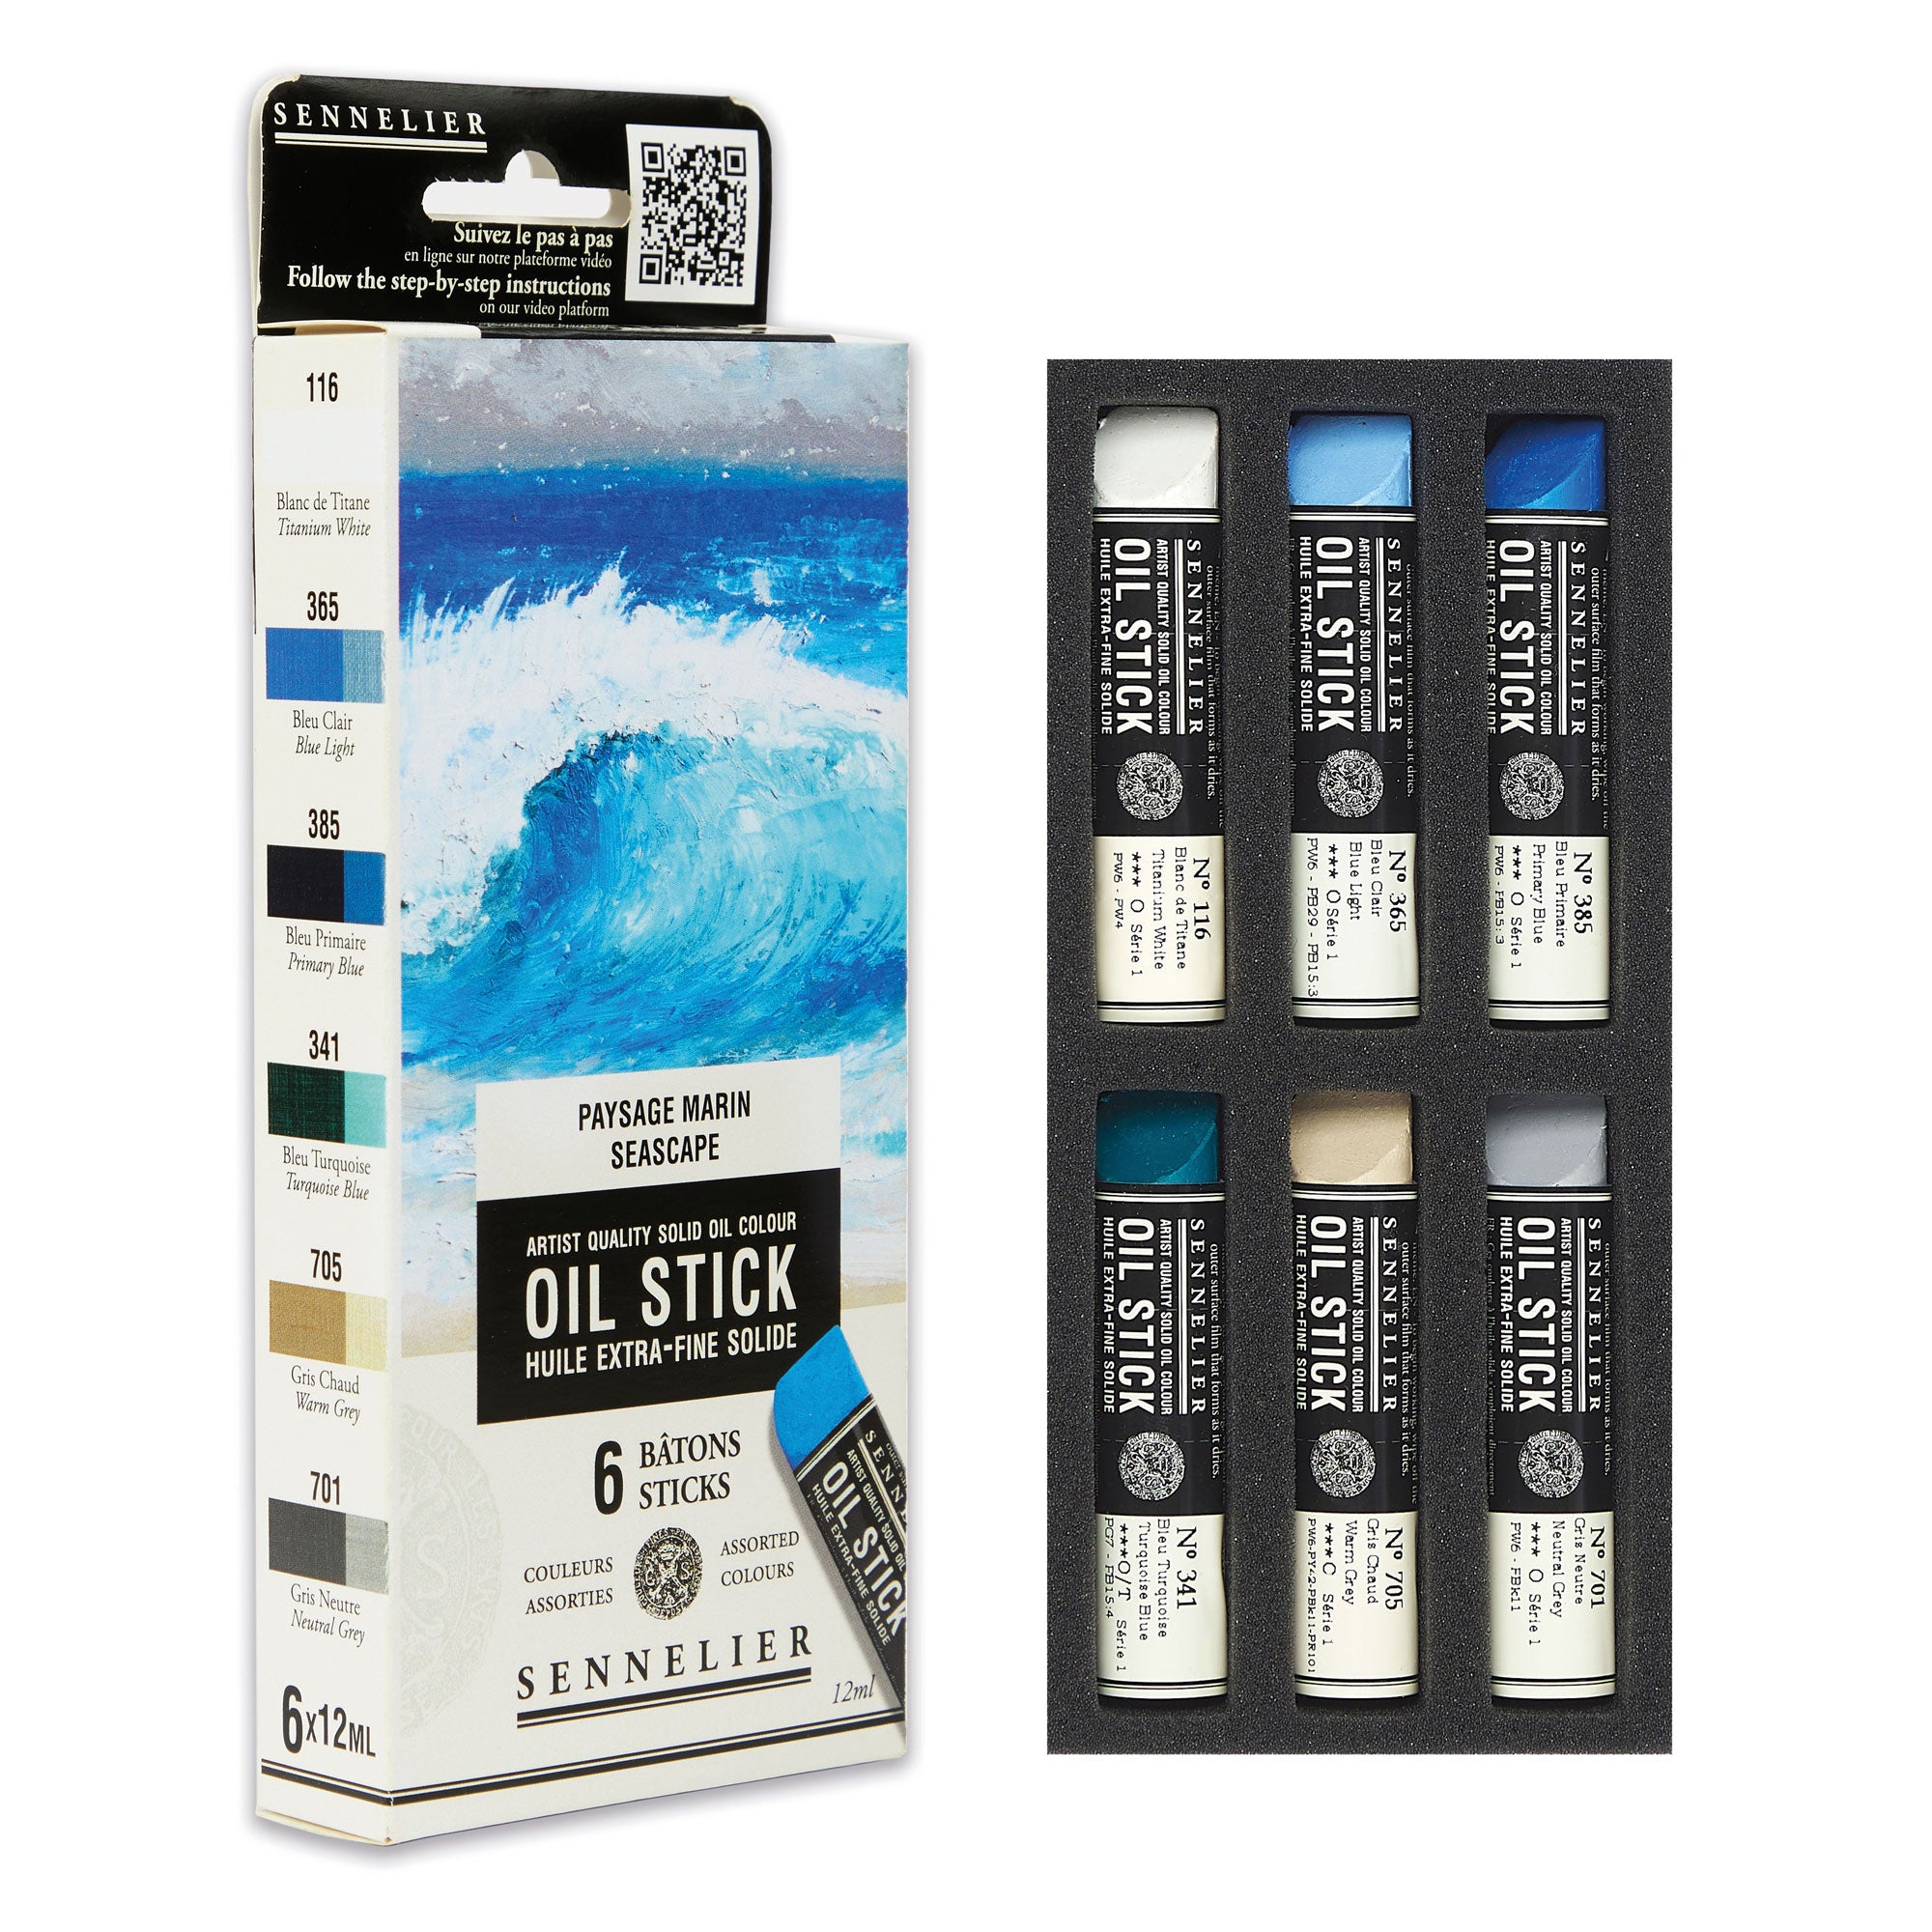 Sennelier Extra Fine Oil Stick 12ml Set of 6 - Seascape